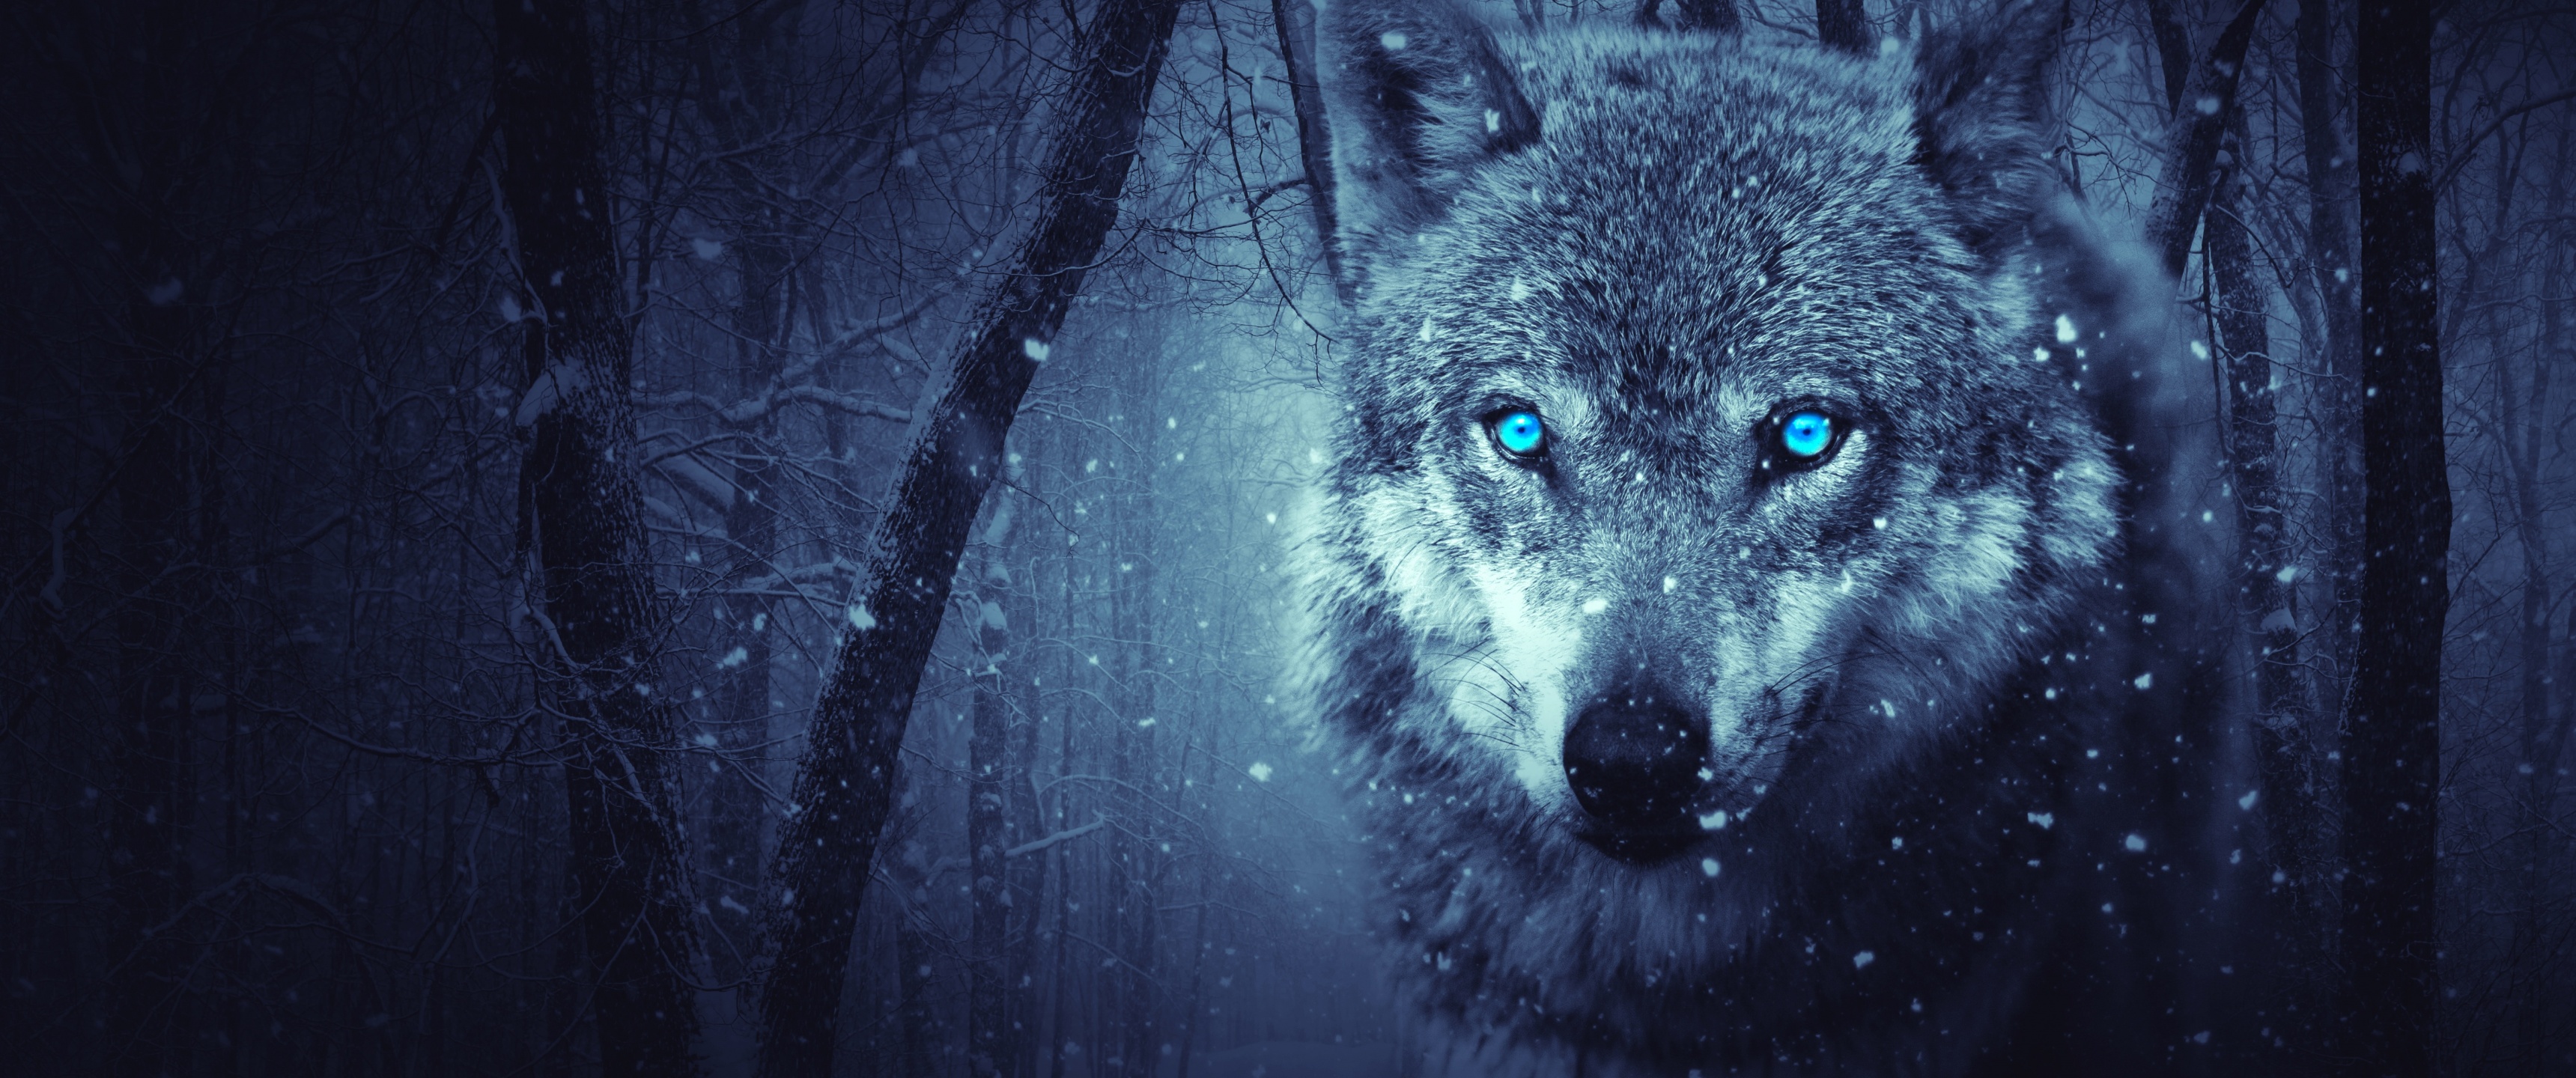 Wolf Wallpaper 4K, Blue eyes, Snowfall, Winter, Night, Forest, 5K, Animals